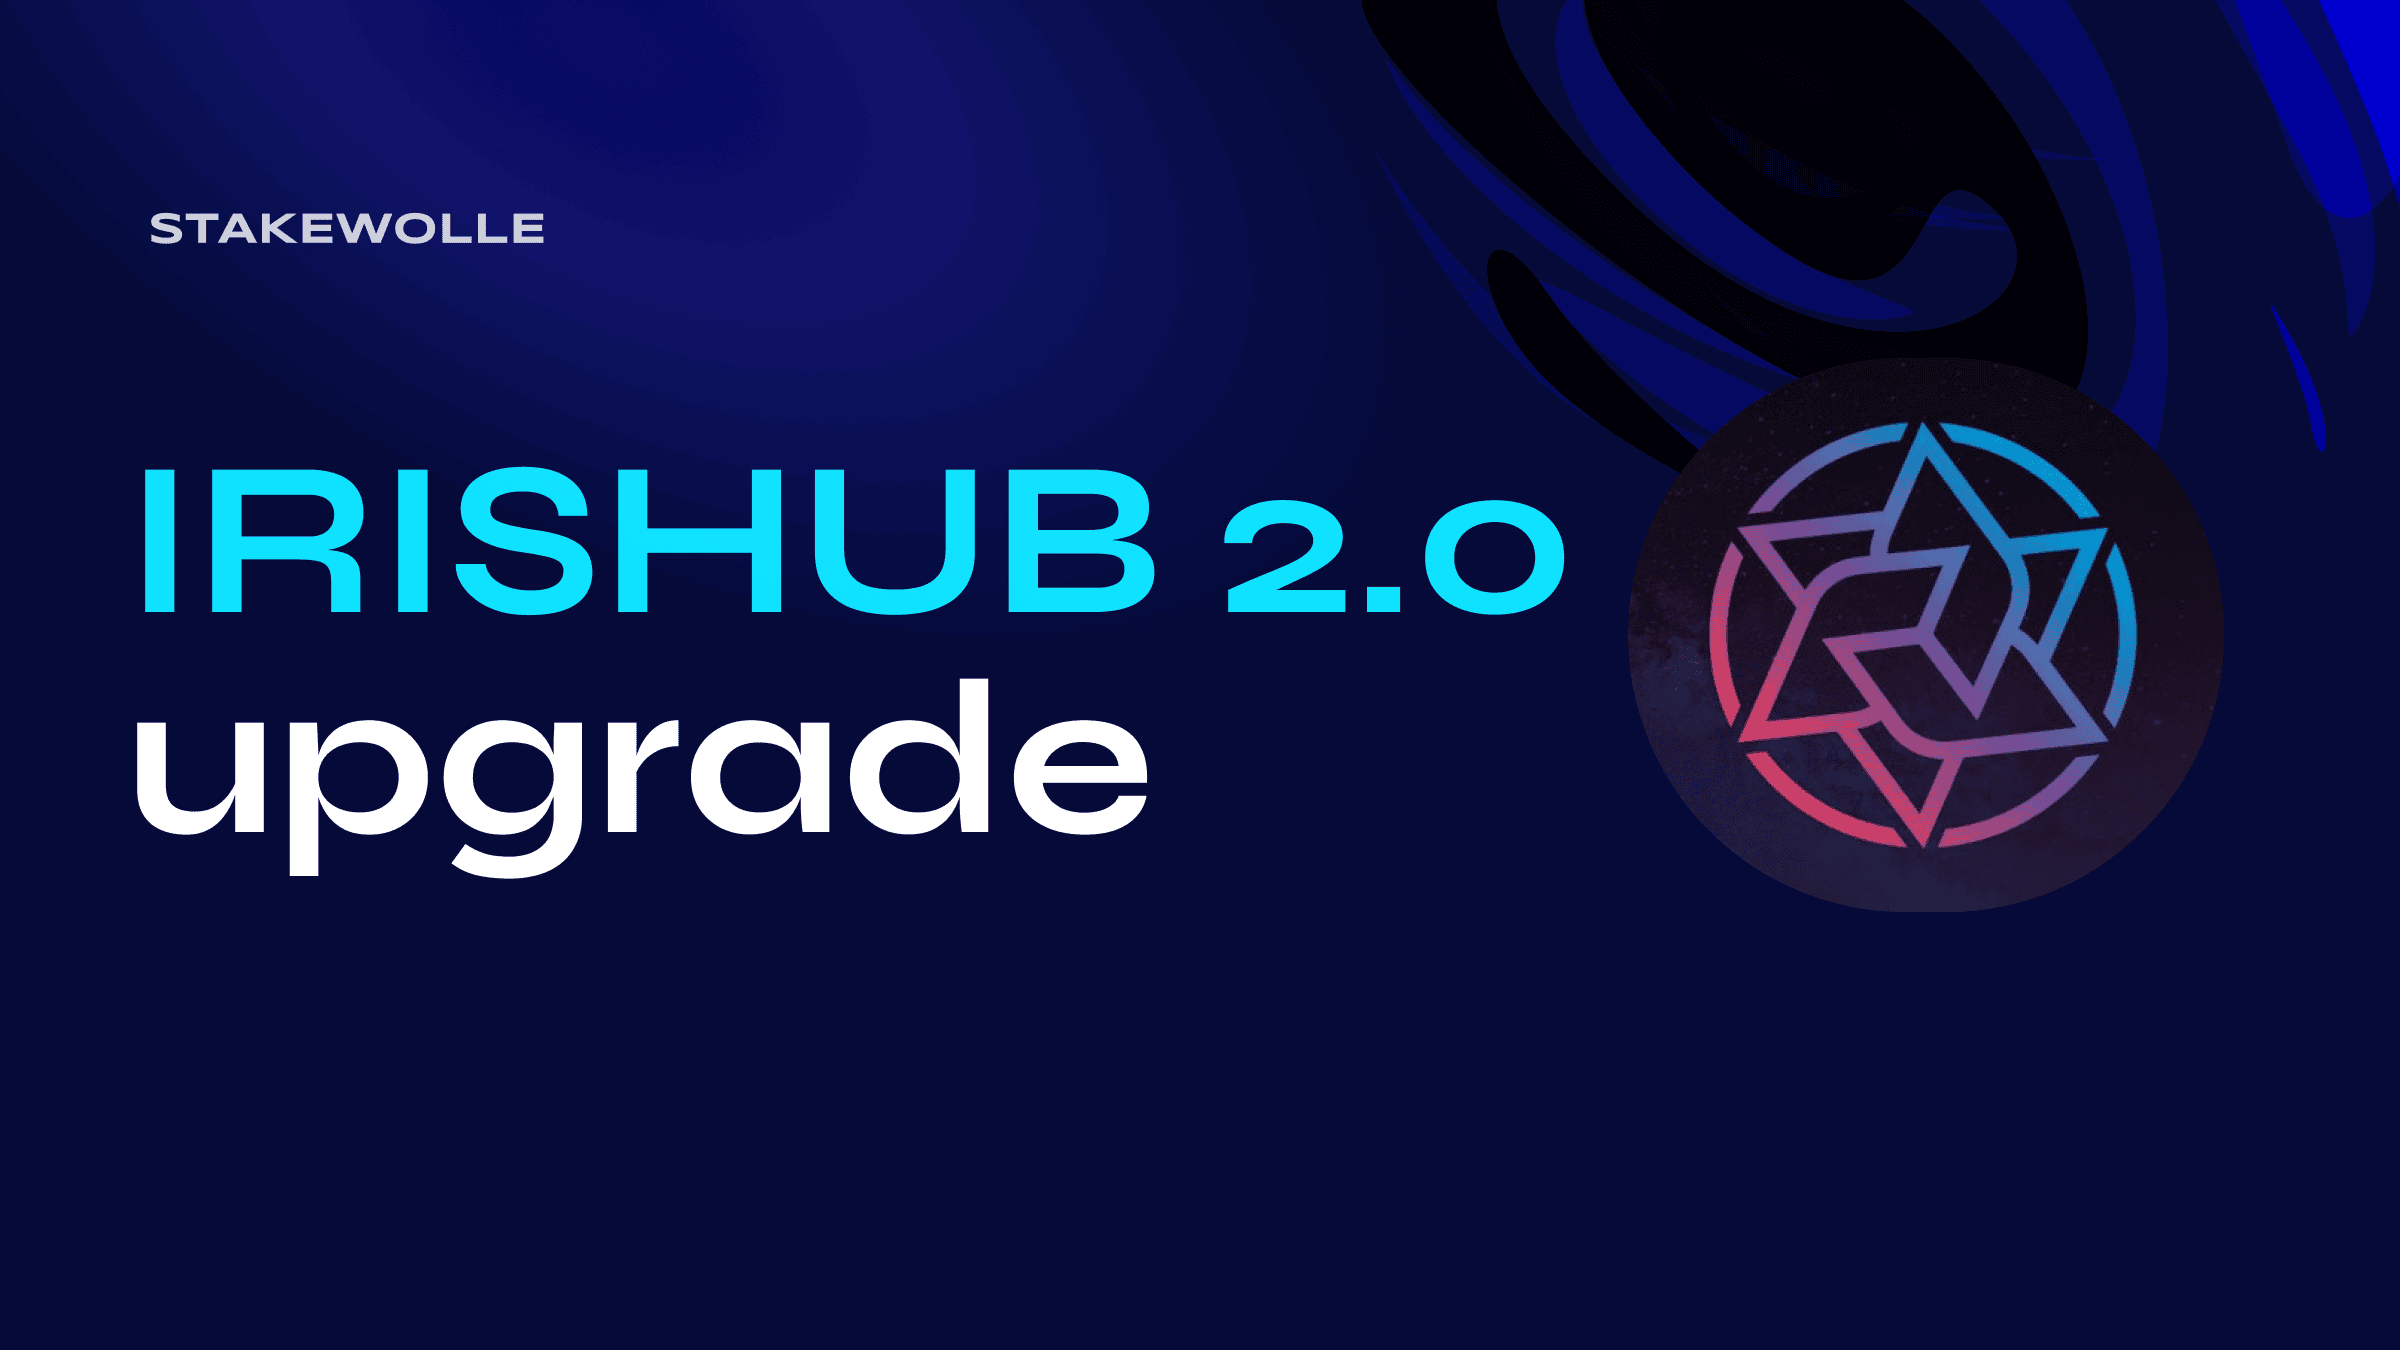 Irishub 2.0 upgrade